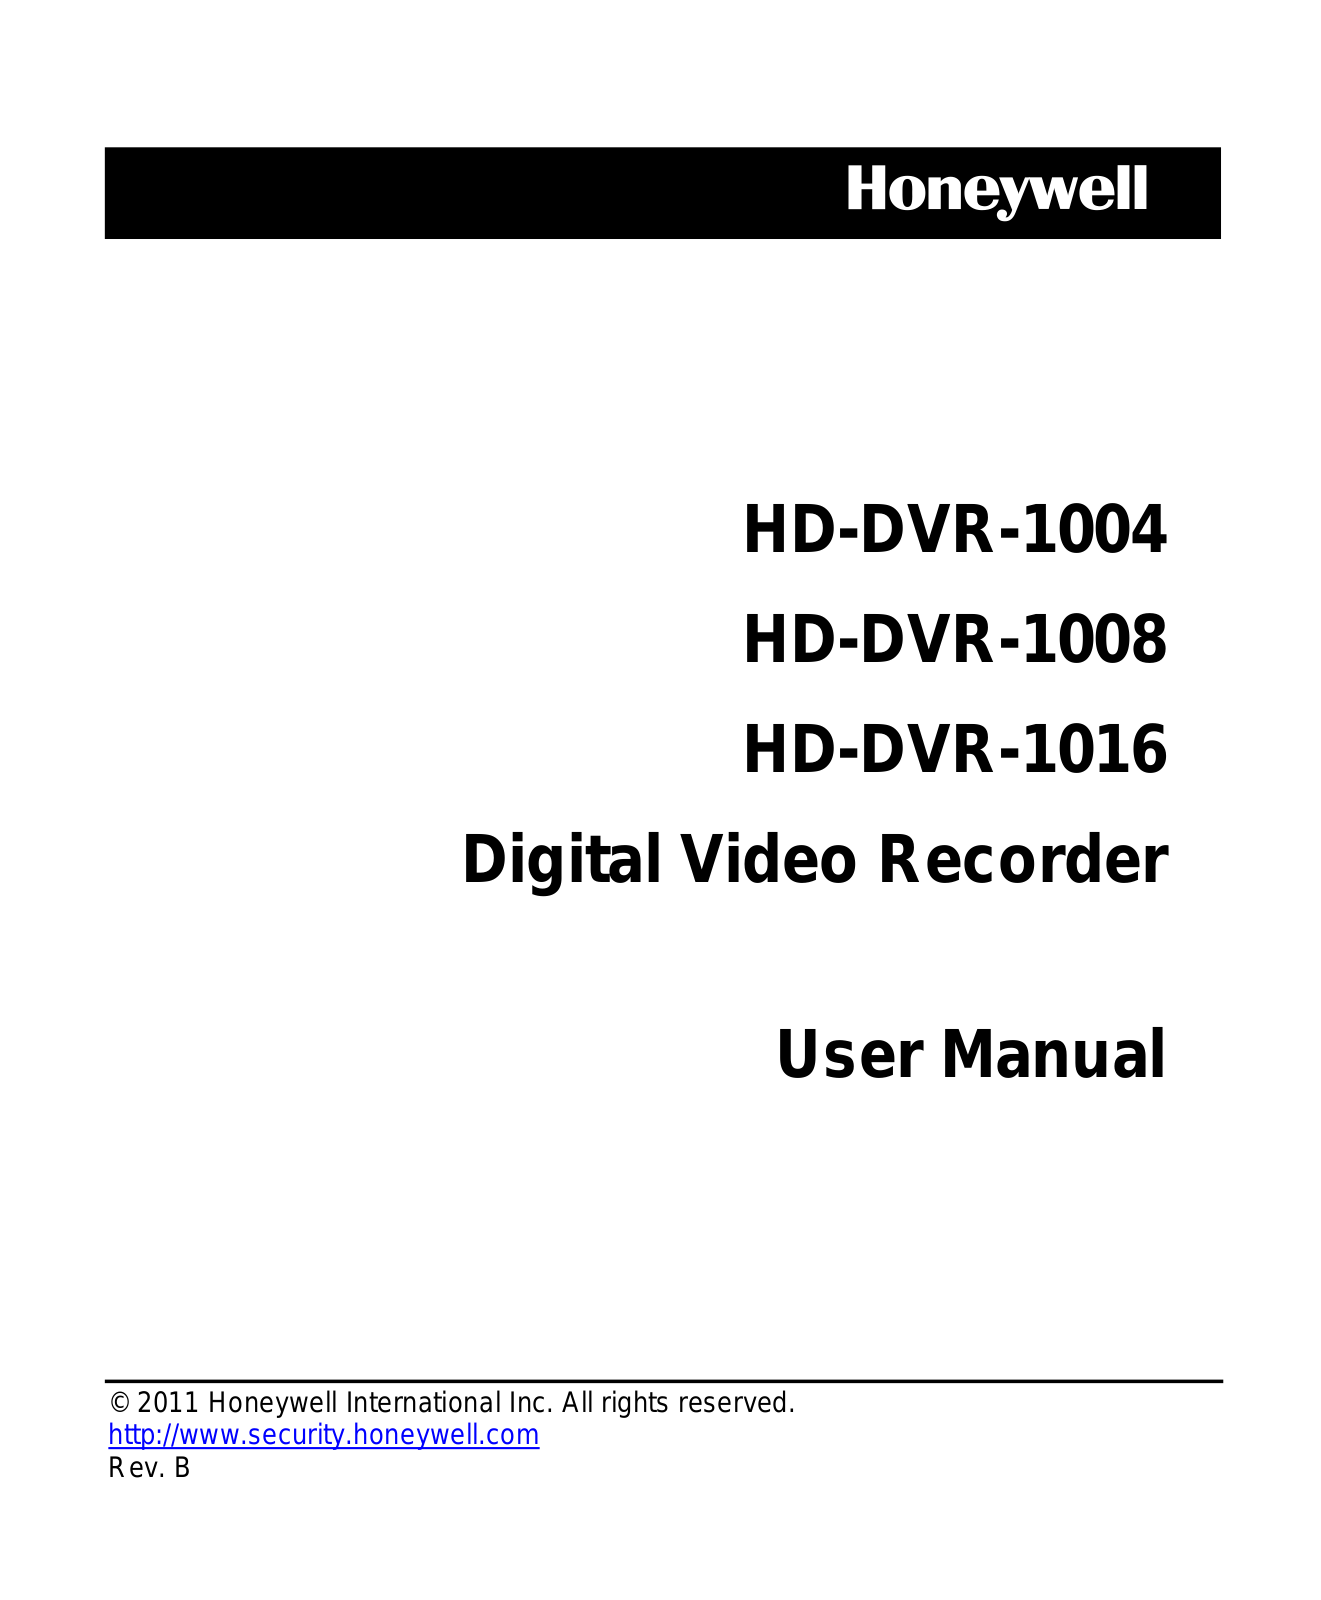 Honeywell HD-DVR-1004, HD-DVR-1016, HD-DVR-1008 User Manual